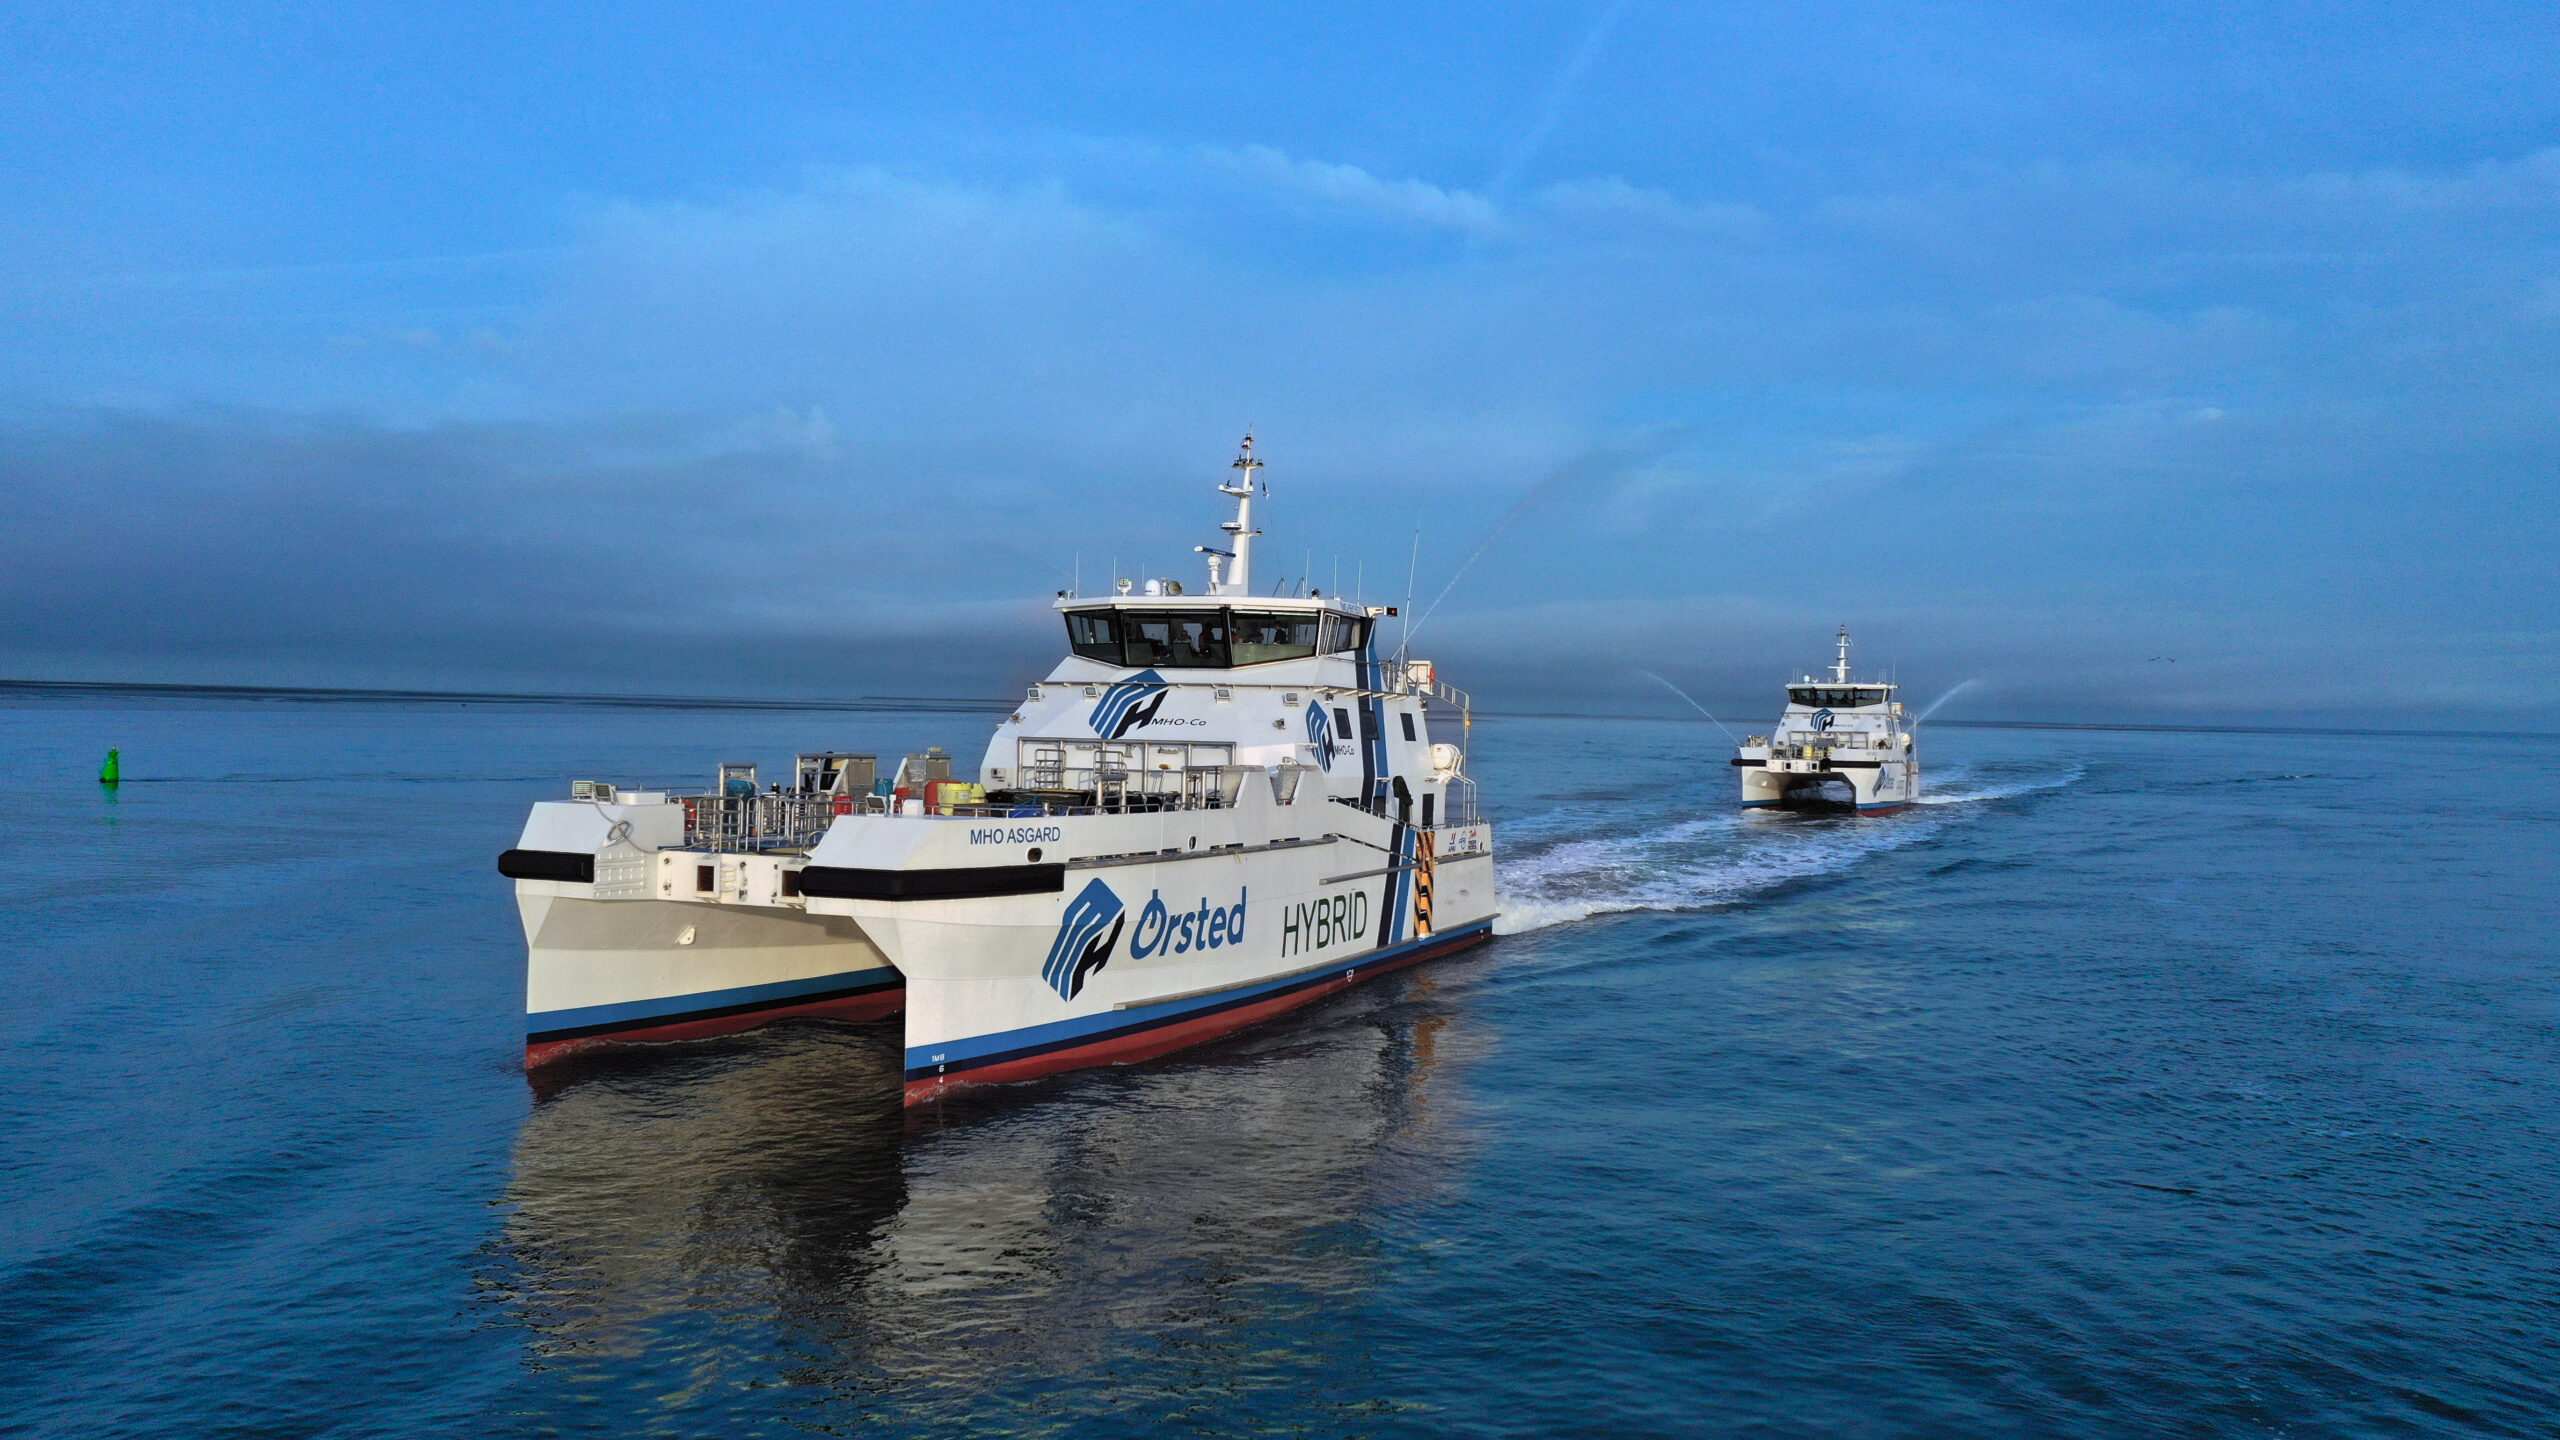 Danfross Editron and Volvo Penta vessels cruising